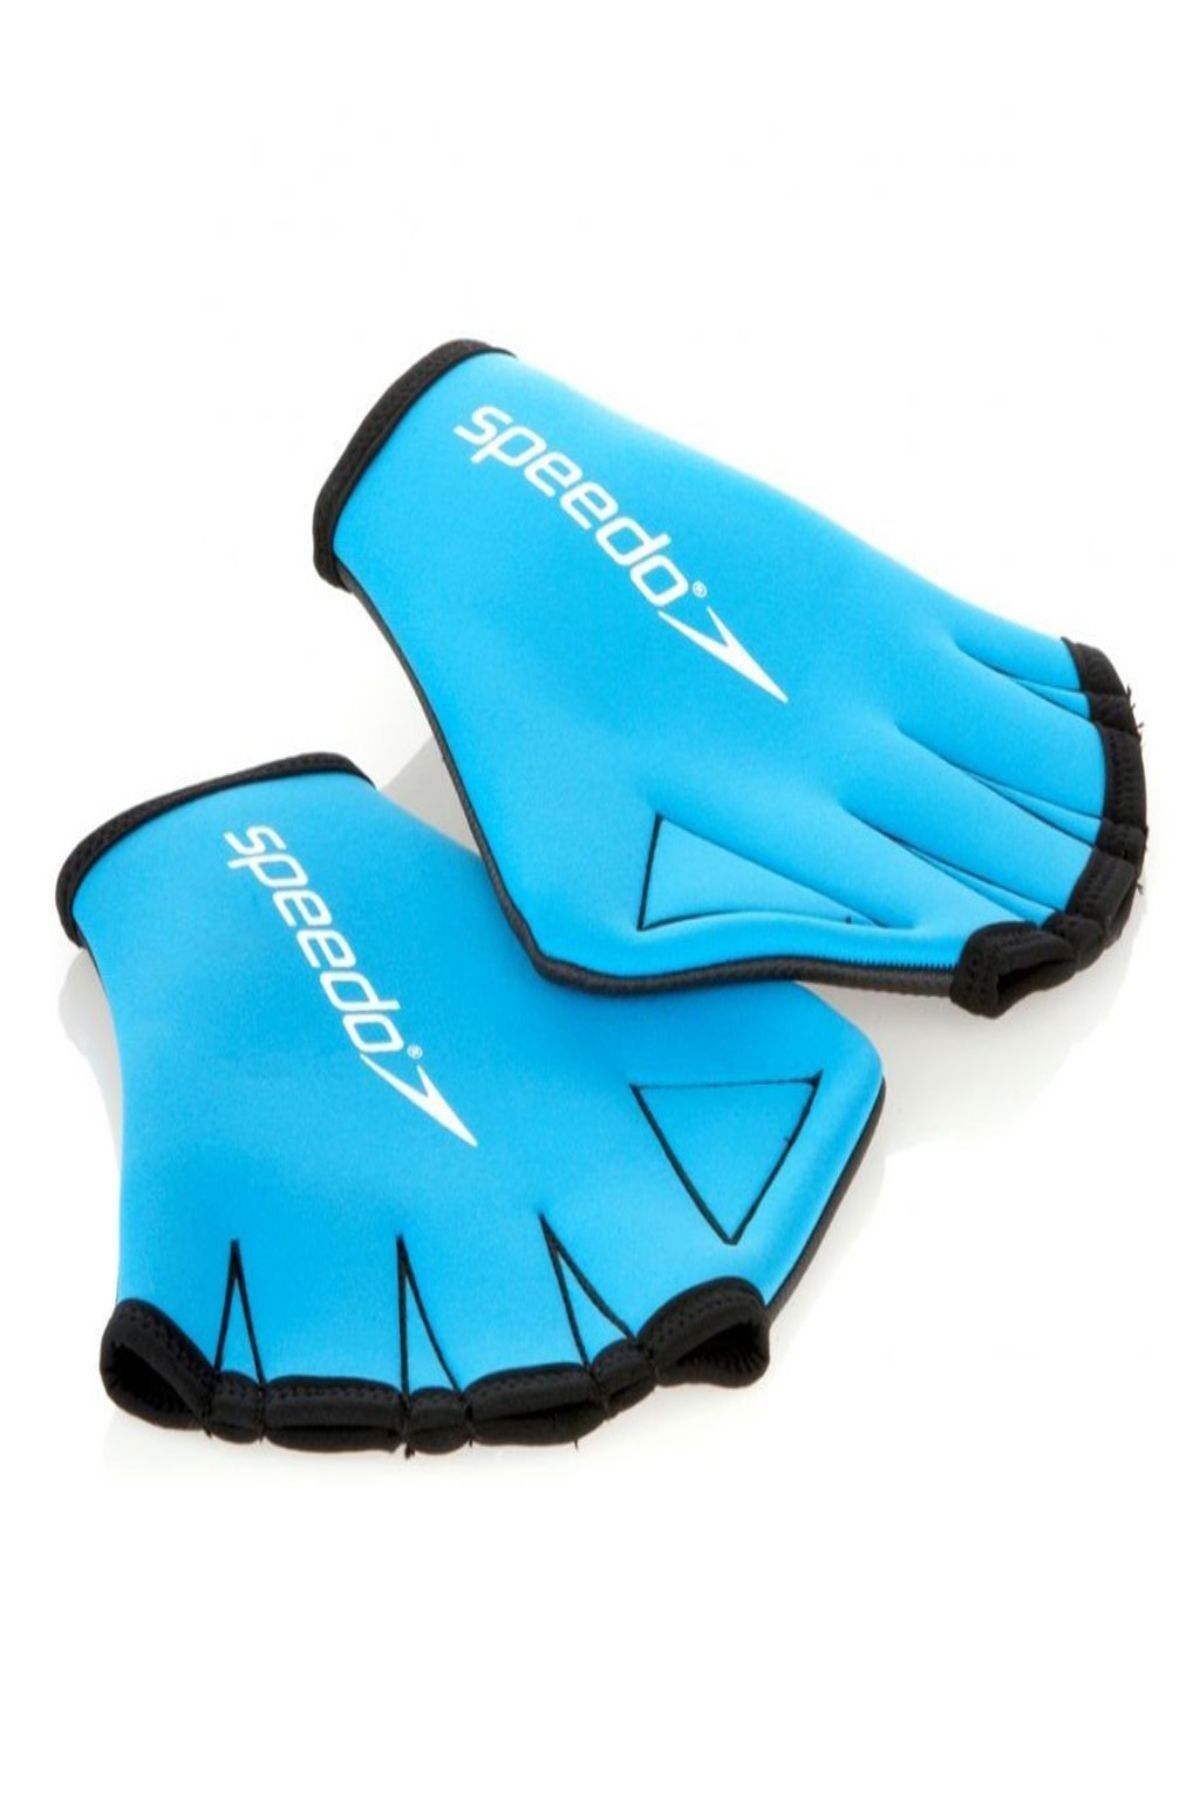 SPEEDO Aqua Glove Au Blue